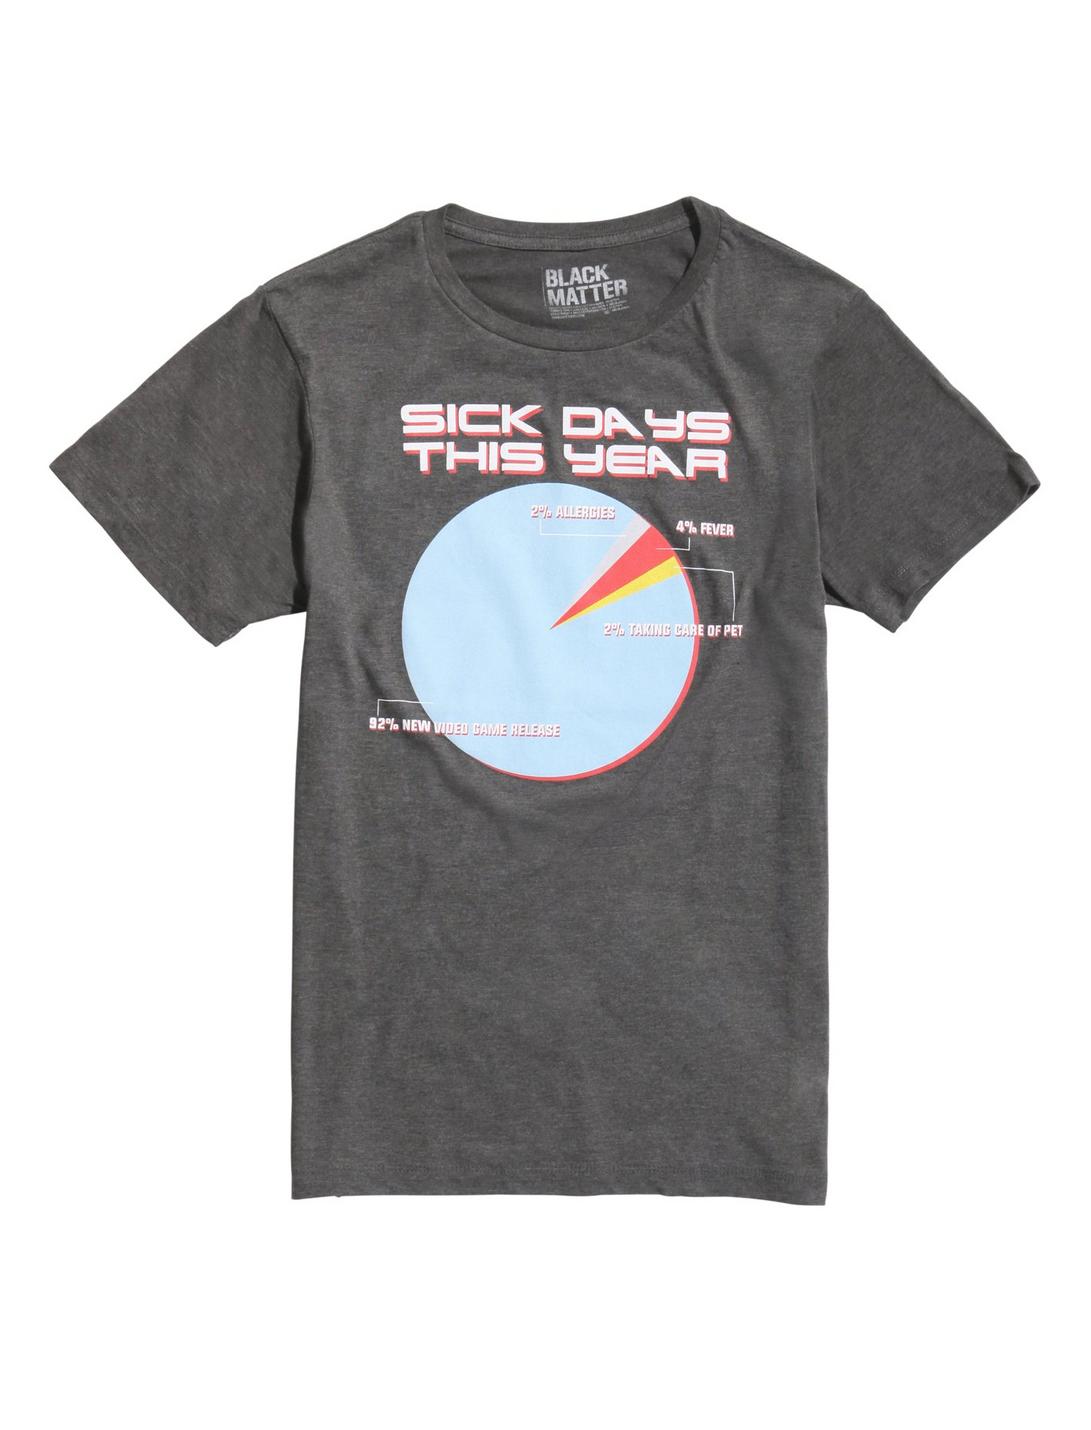 Sick Days Pie Chart T-Shirt, CHARCOAL HEATHER, hi-res